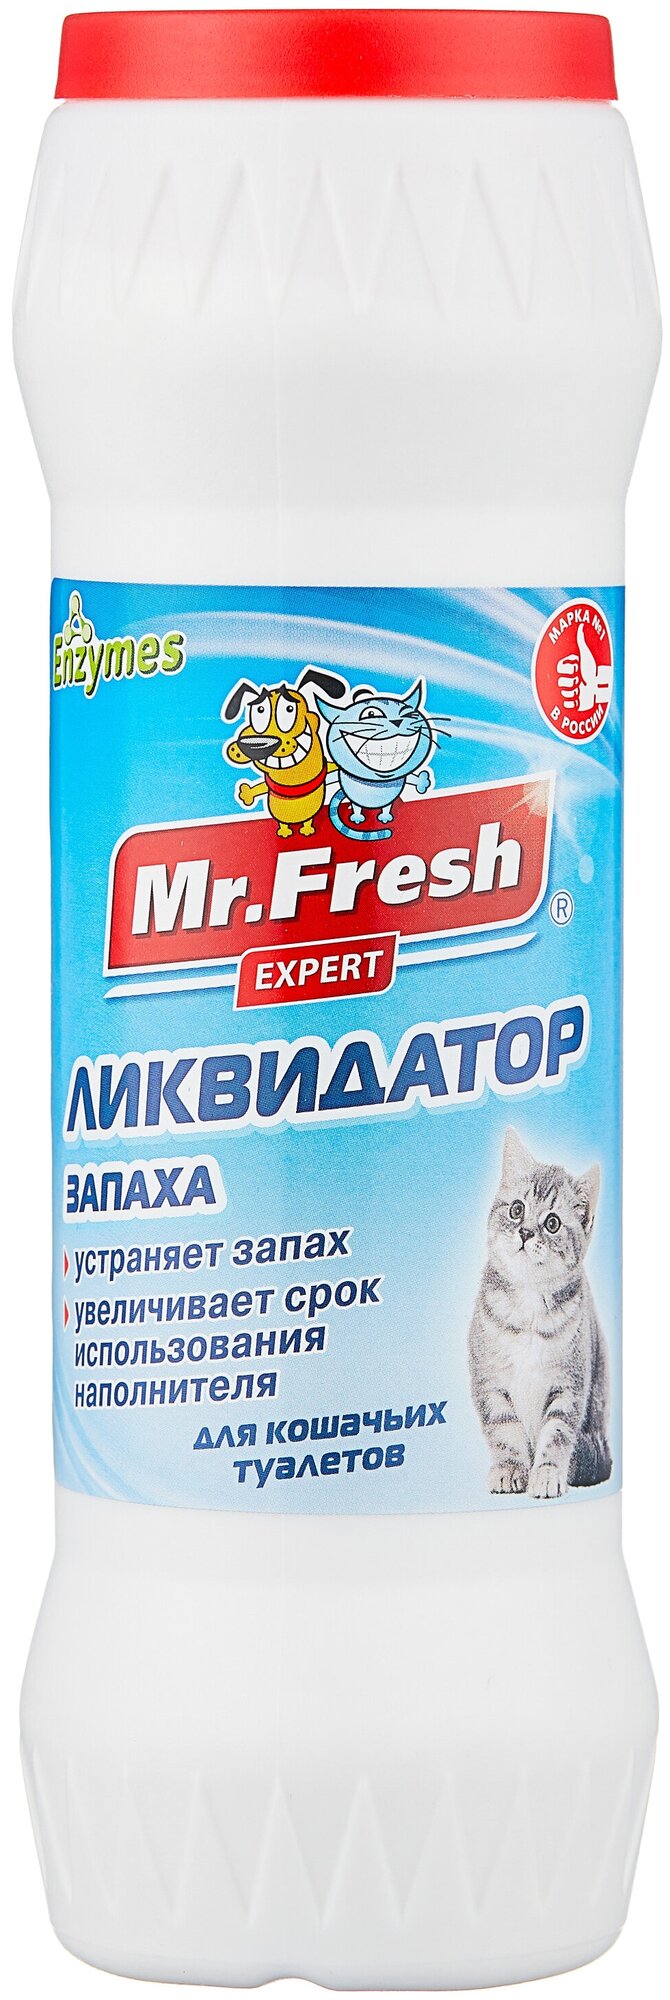 Mr.Fresh Ликвидатор запаха Mr.Fresh 2в1 для кошачьих туалетов, 500 г - фотография № 1